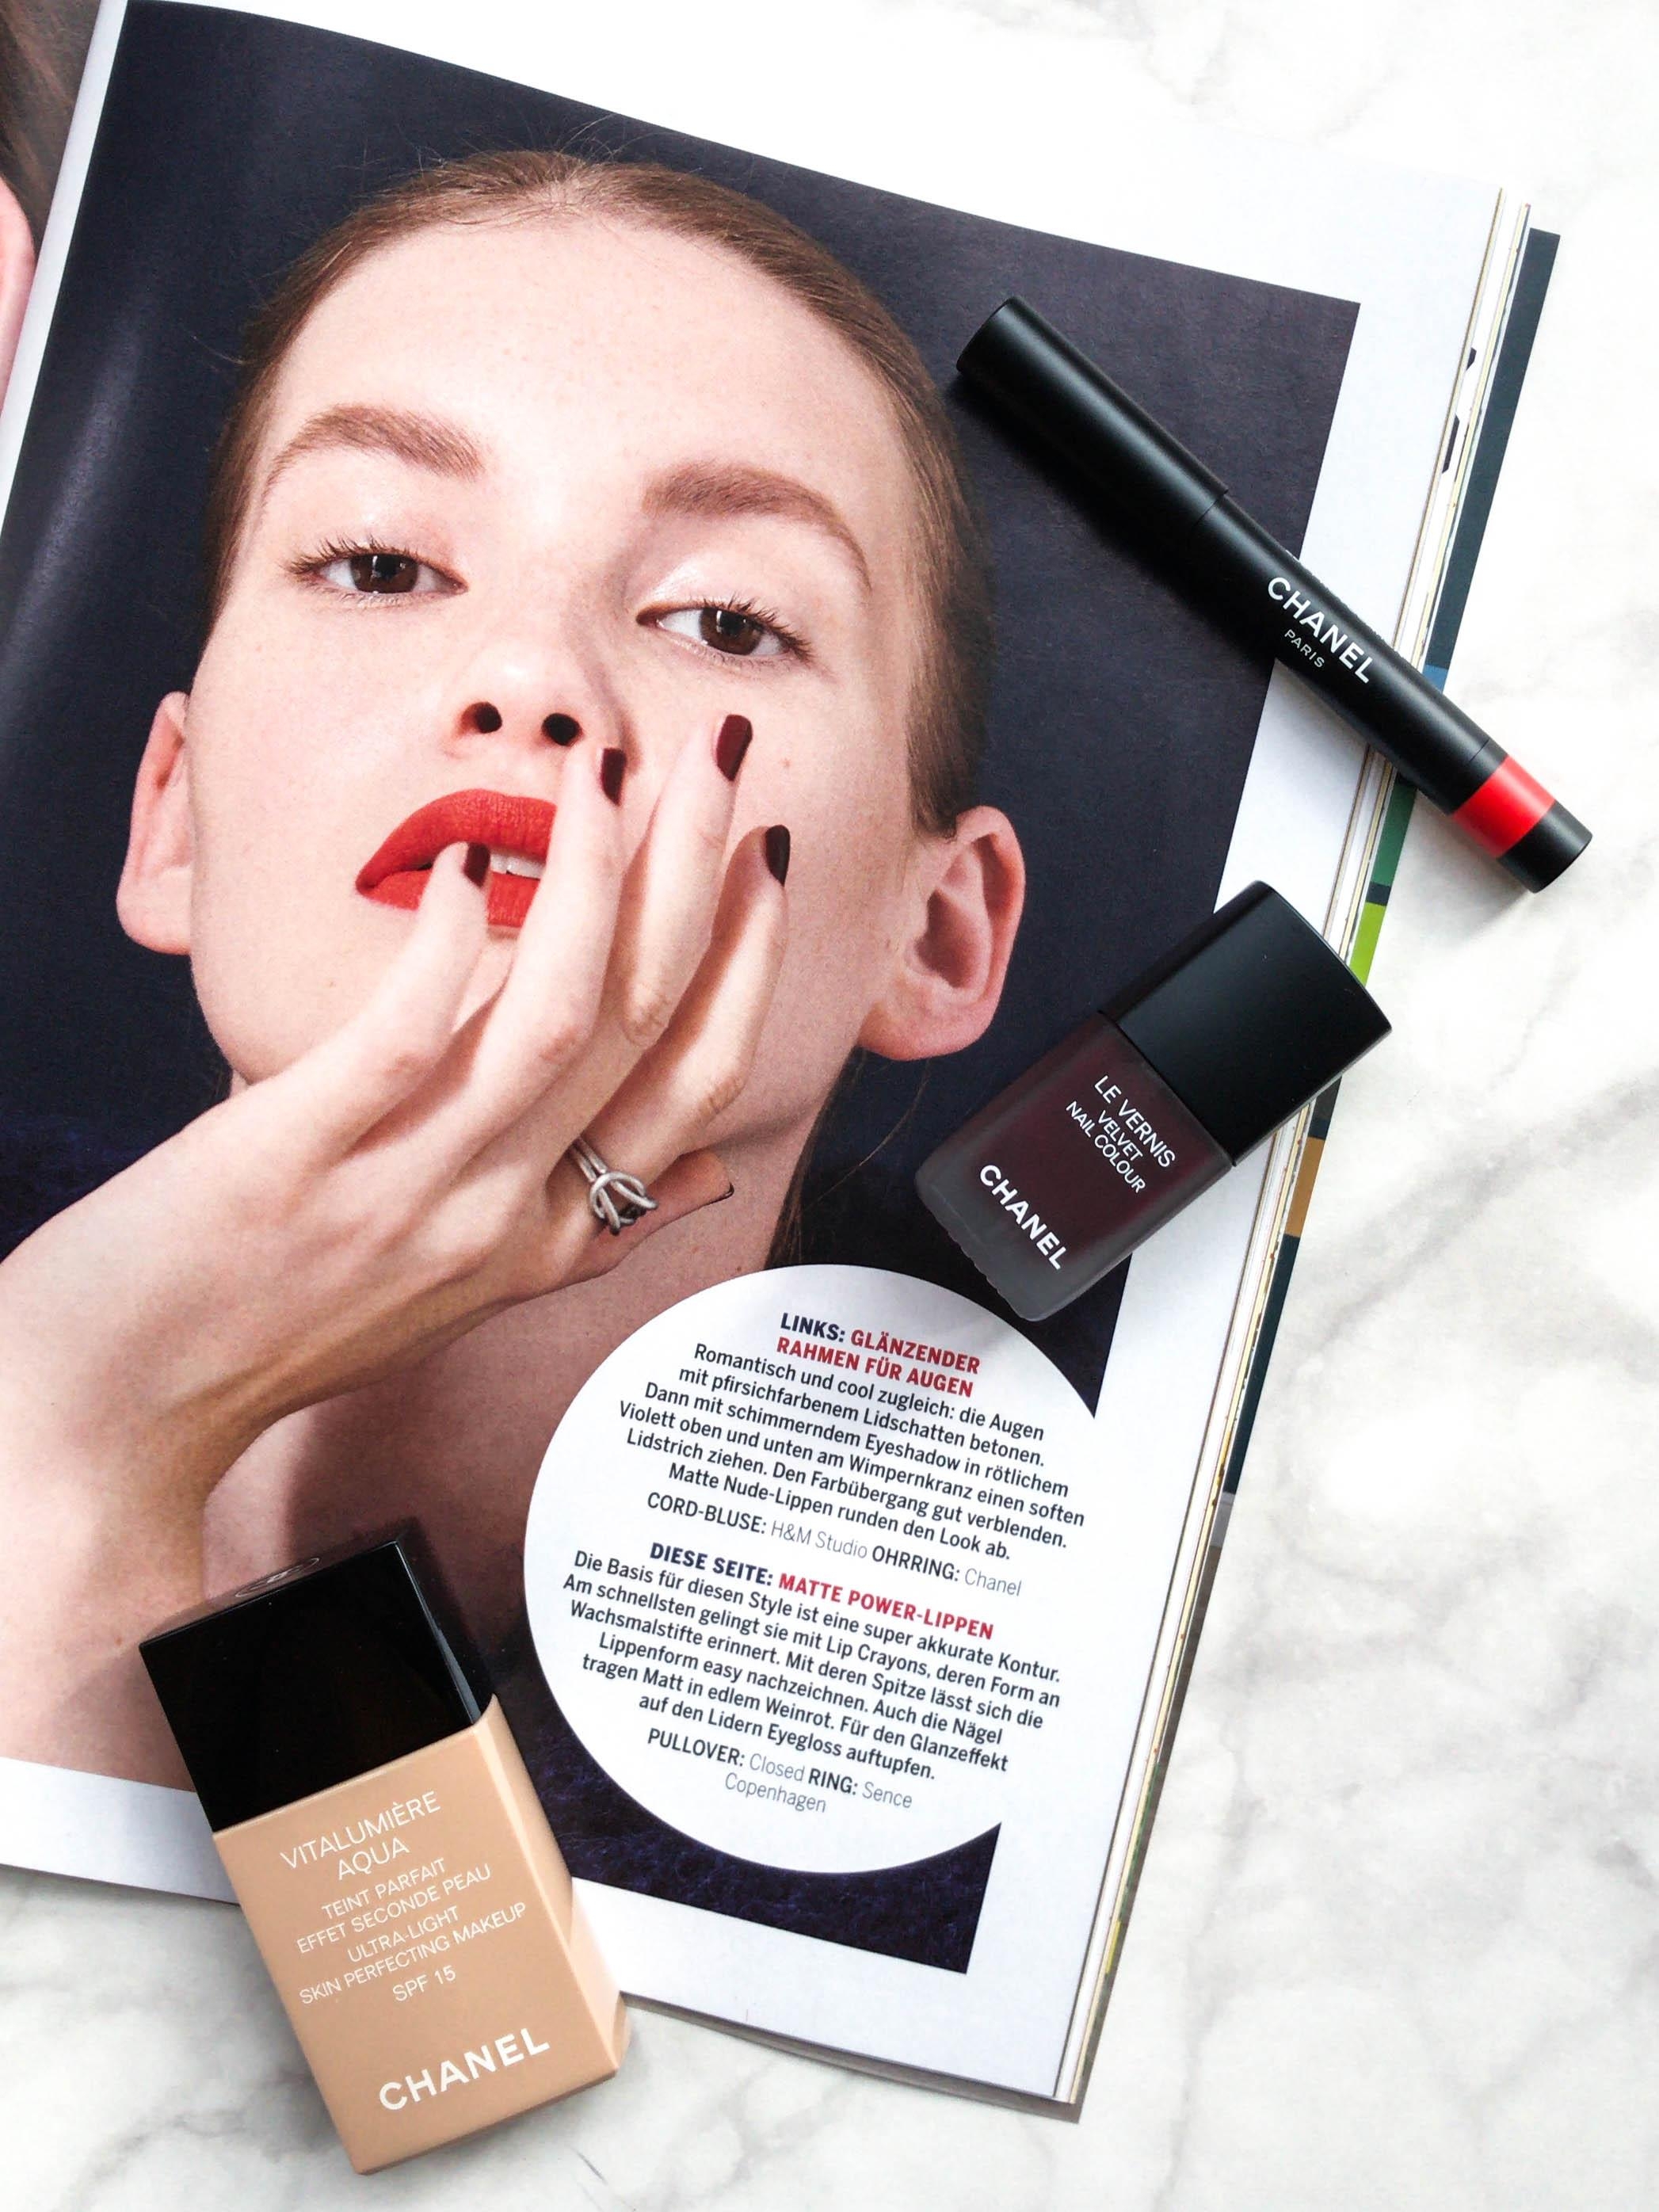 Look No. 2: Matte Power-Lippe treffen auf glossy Lider! Mehr im aktuellen Heft!
#beautylieblinge #chanelbeauty #makeup 